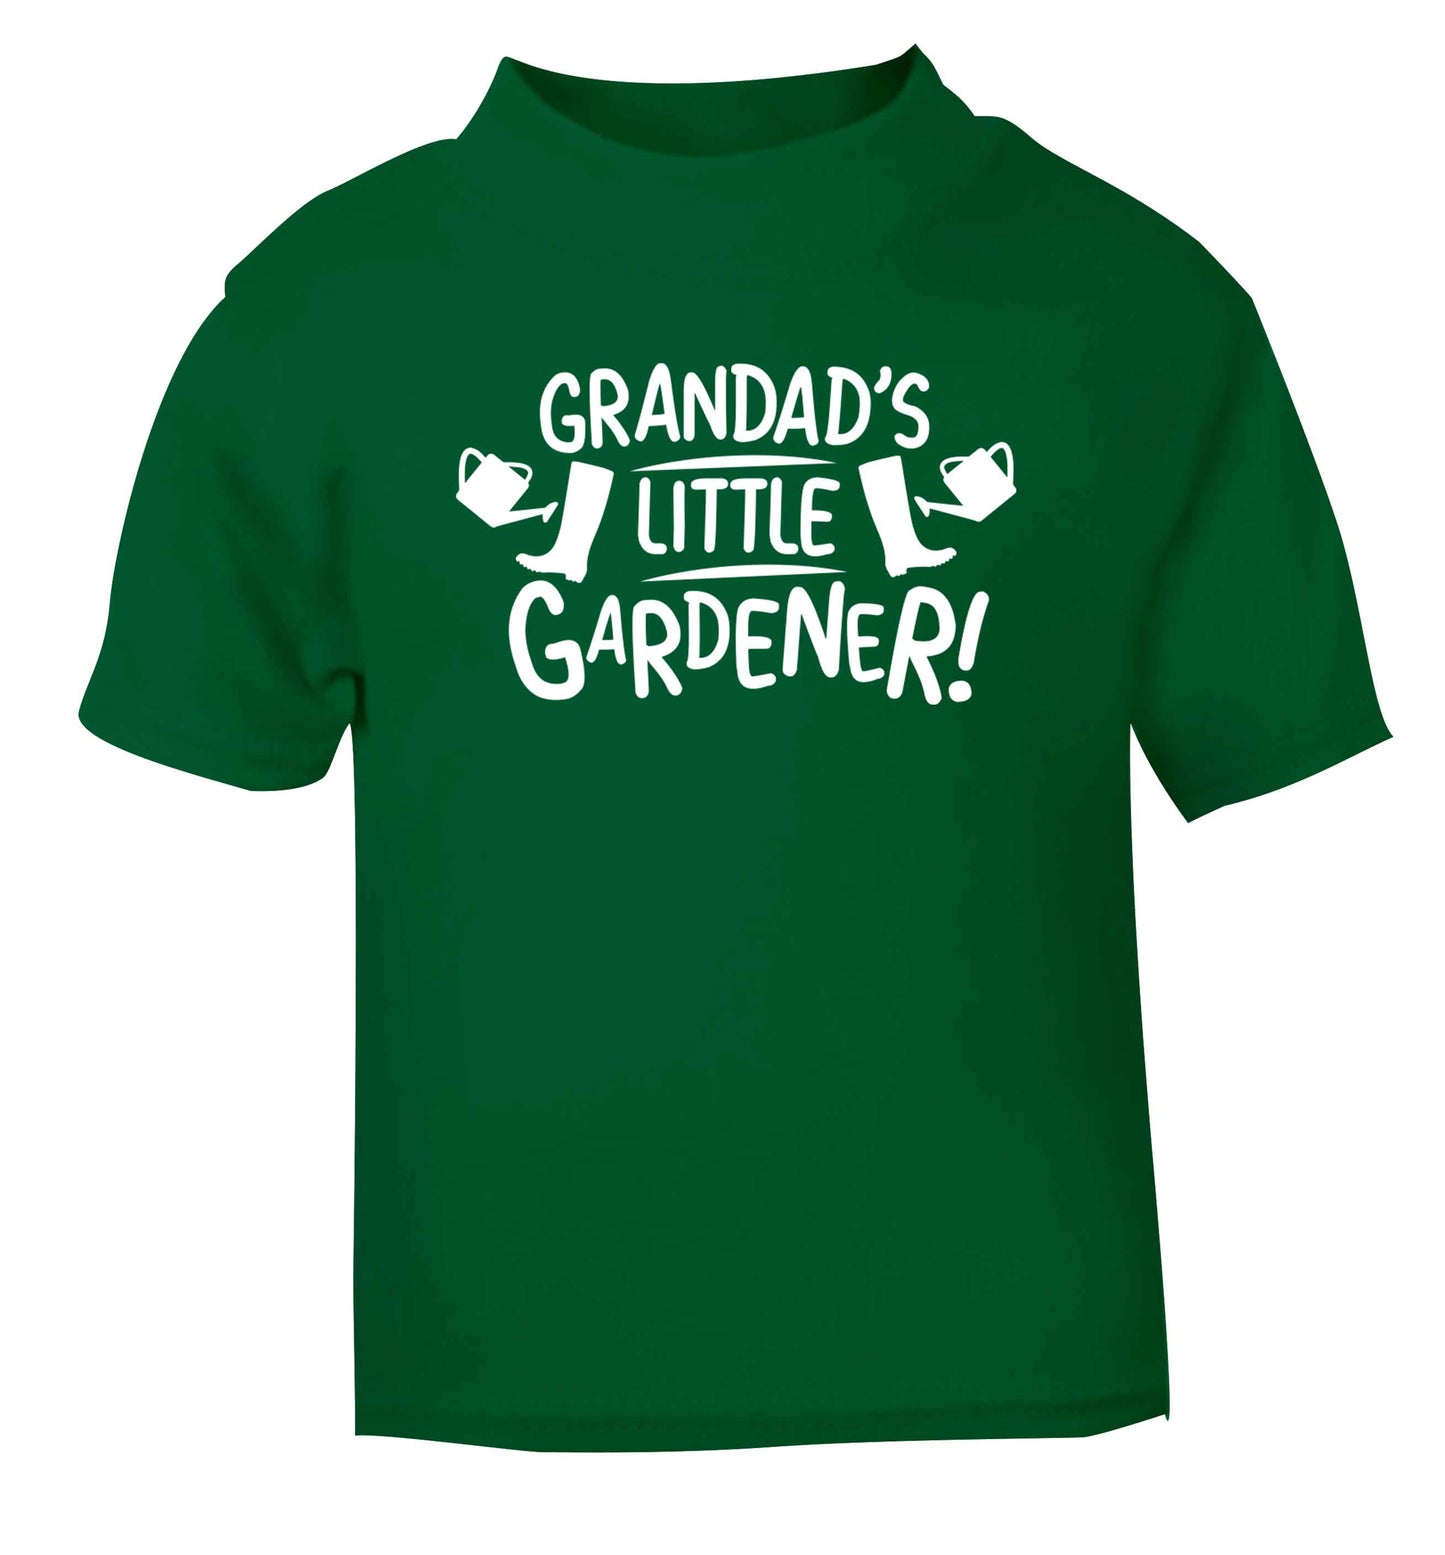 Grandad's little gardener green Baby Toddler Tshirt 2 Years